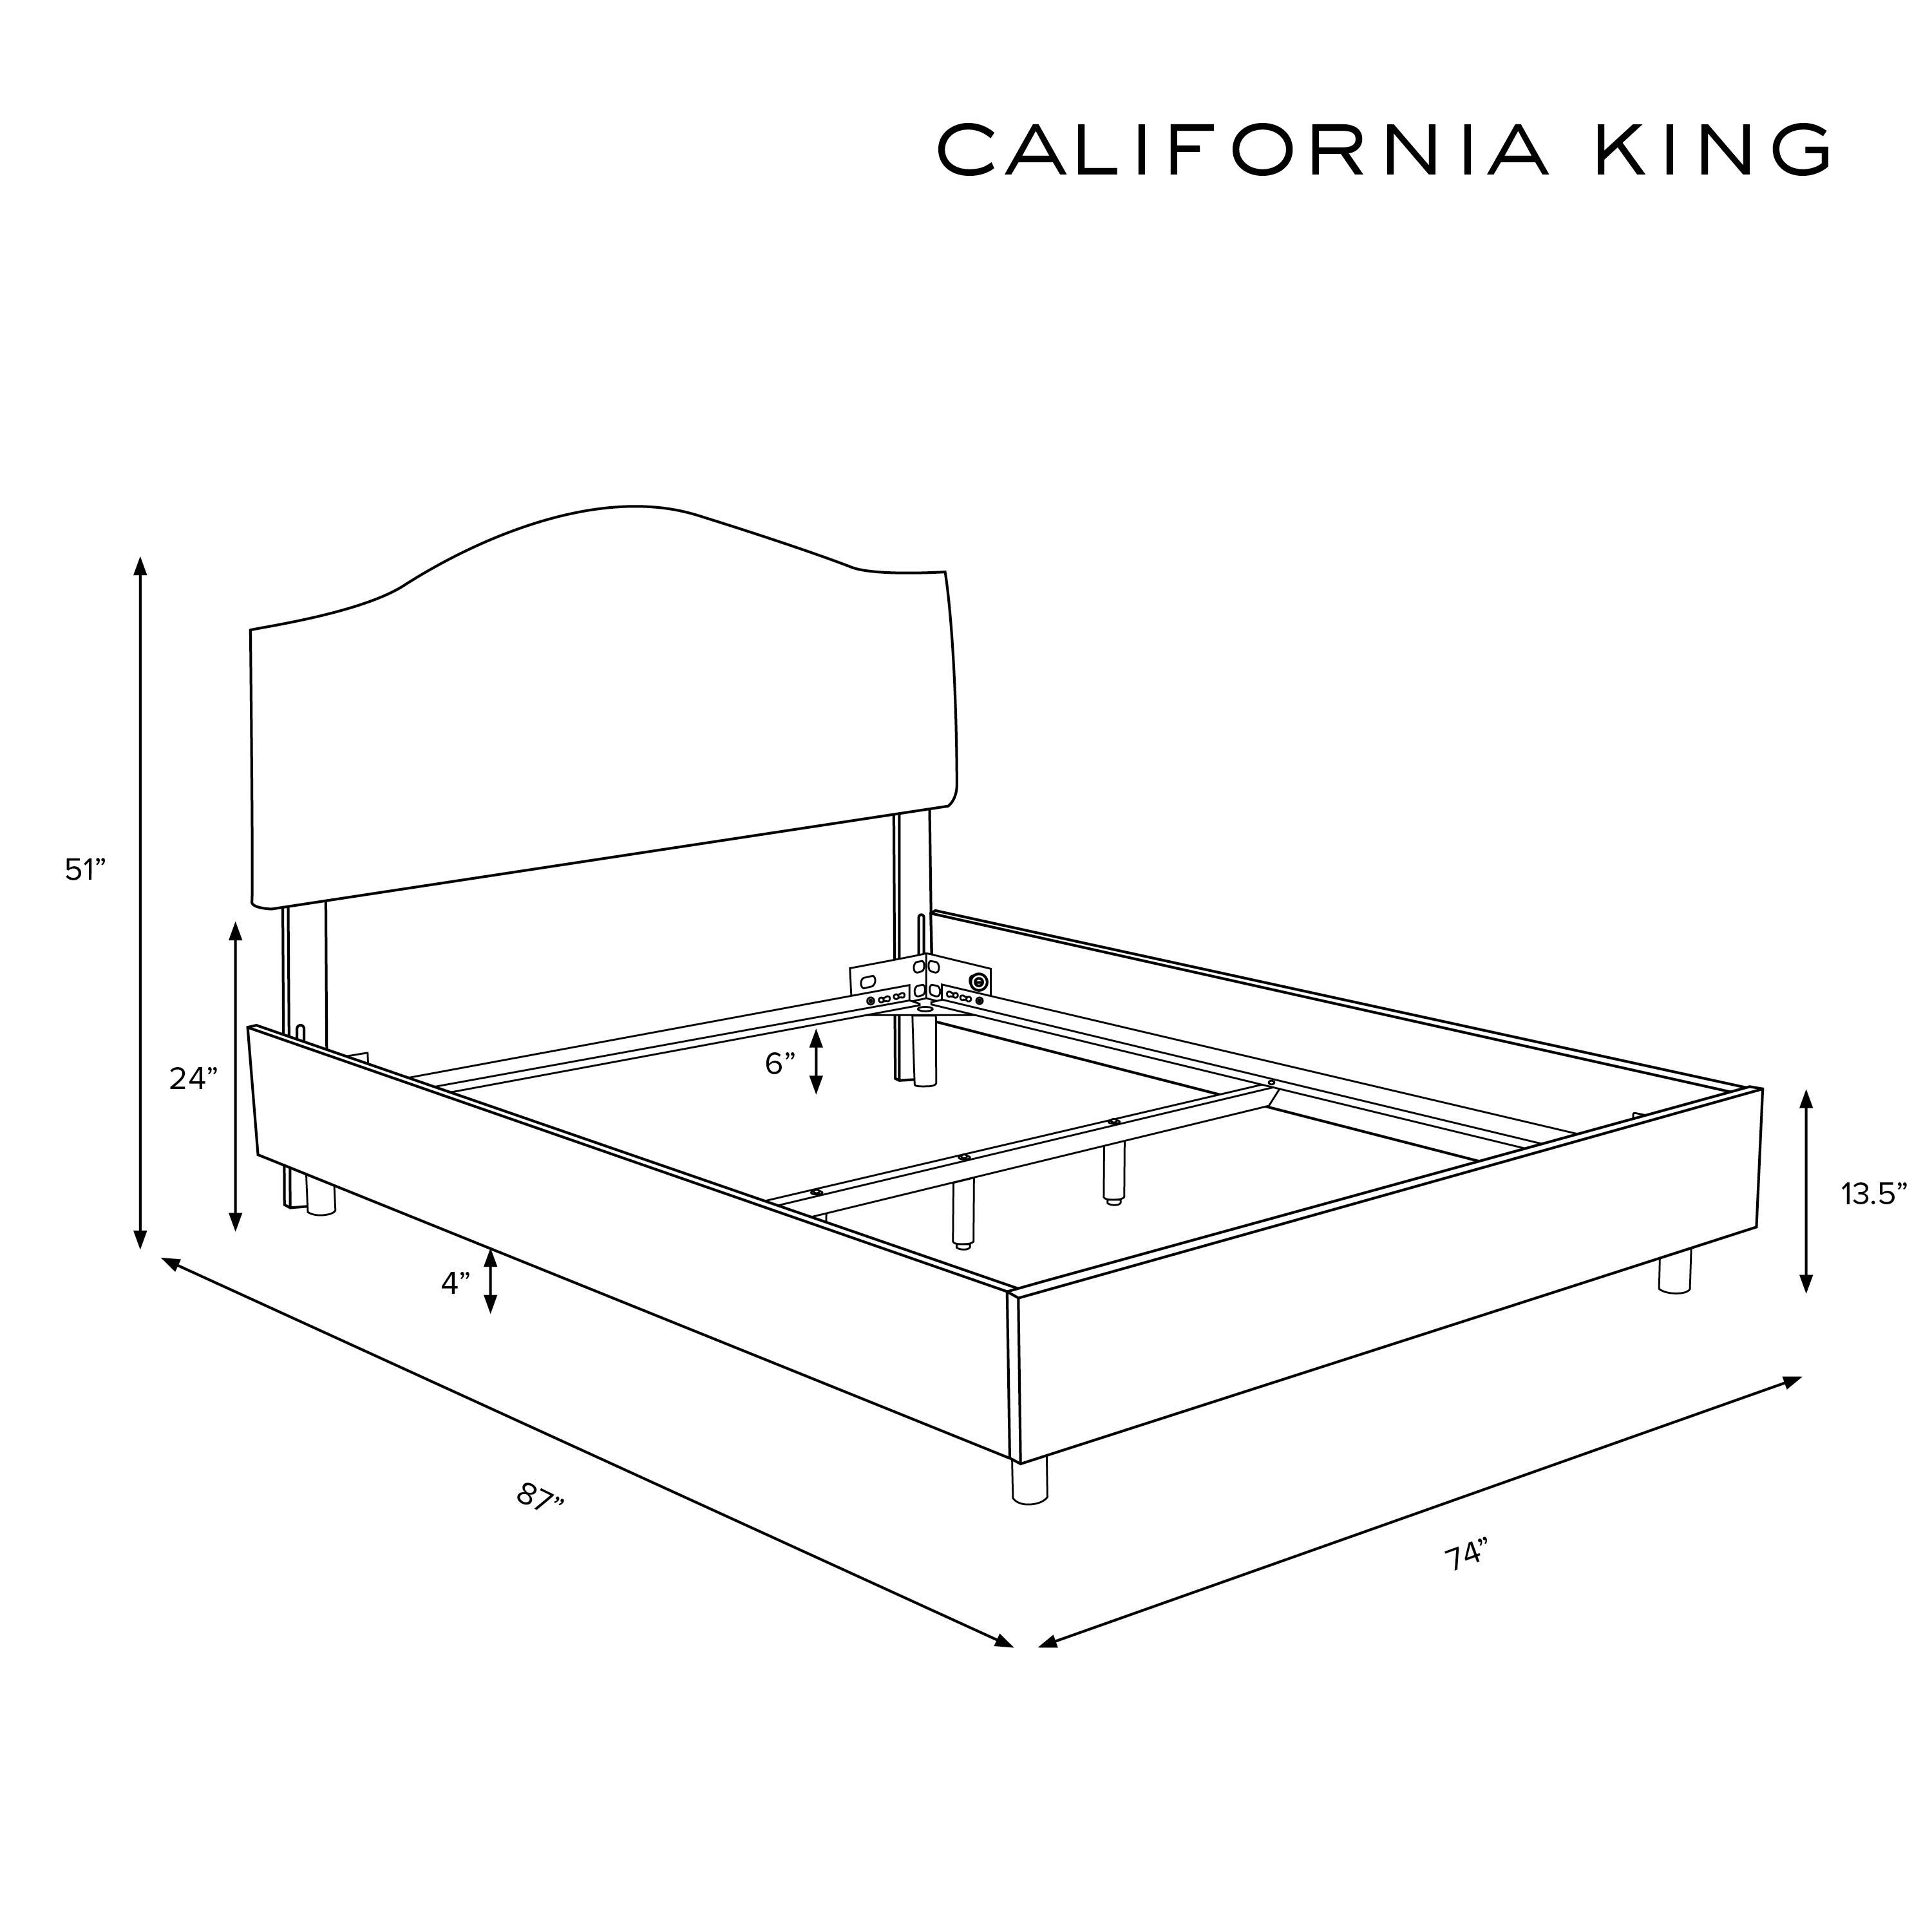 California King Kenmore Bed in Zuma Caviar - Image 5